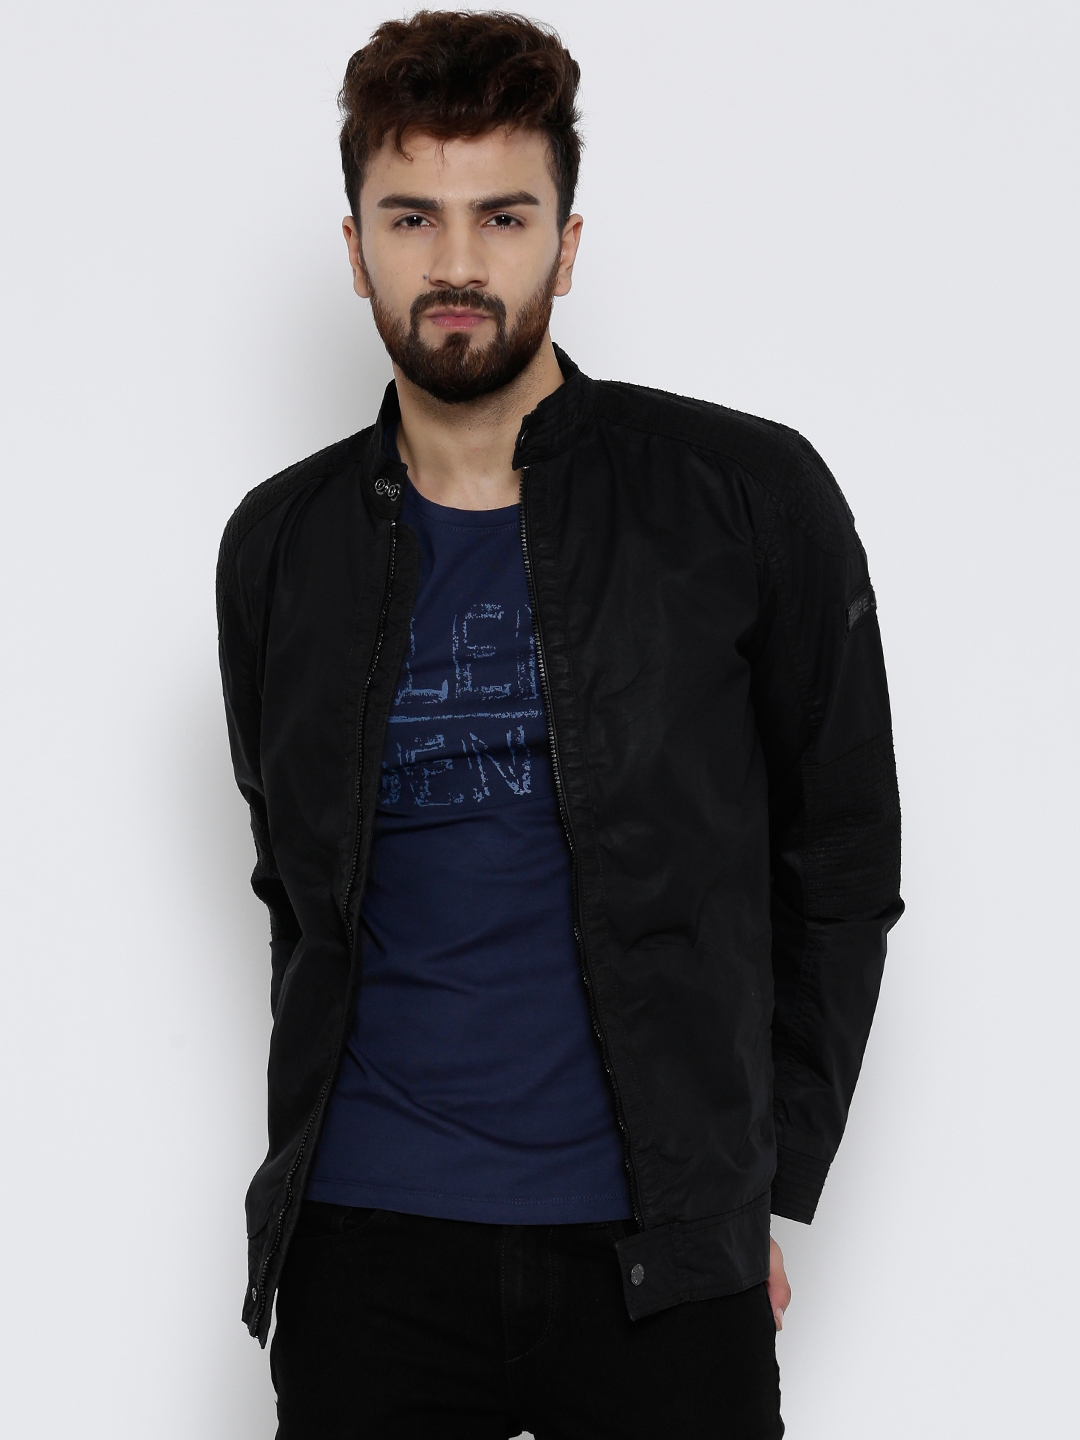 Buy Pepe Jeans Black Jacket - Jackets for Men 1633008 | Myntra